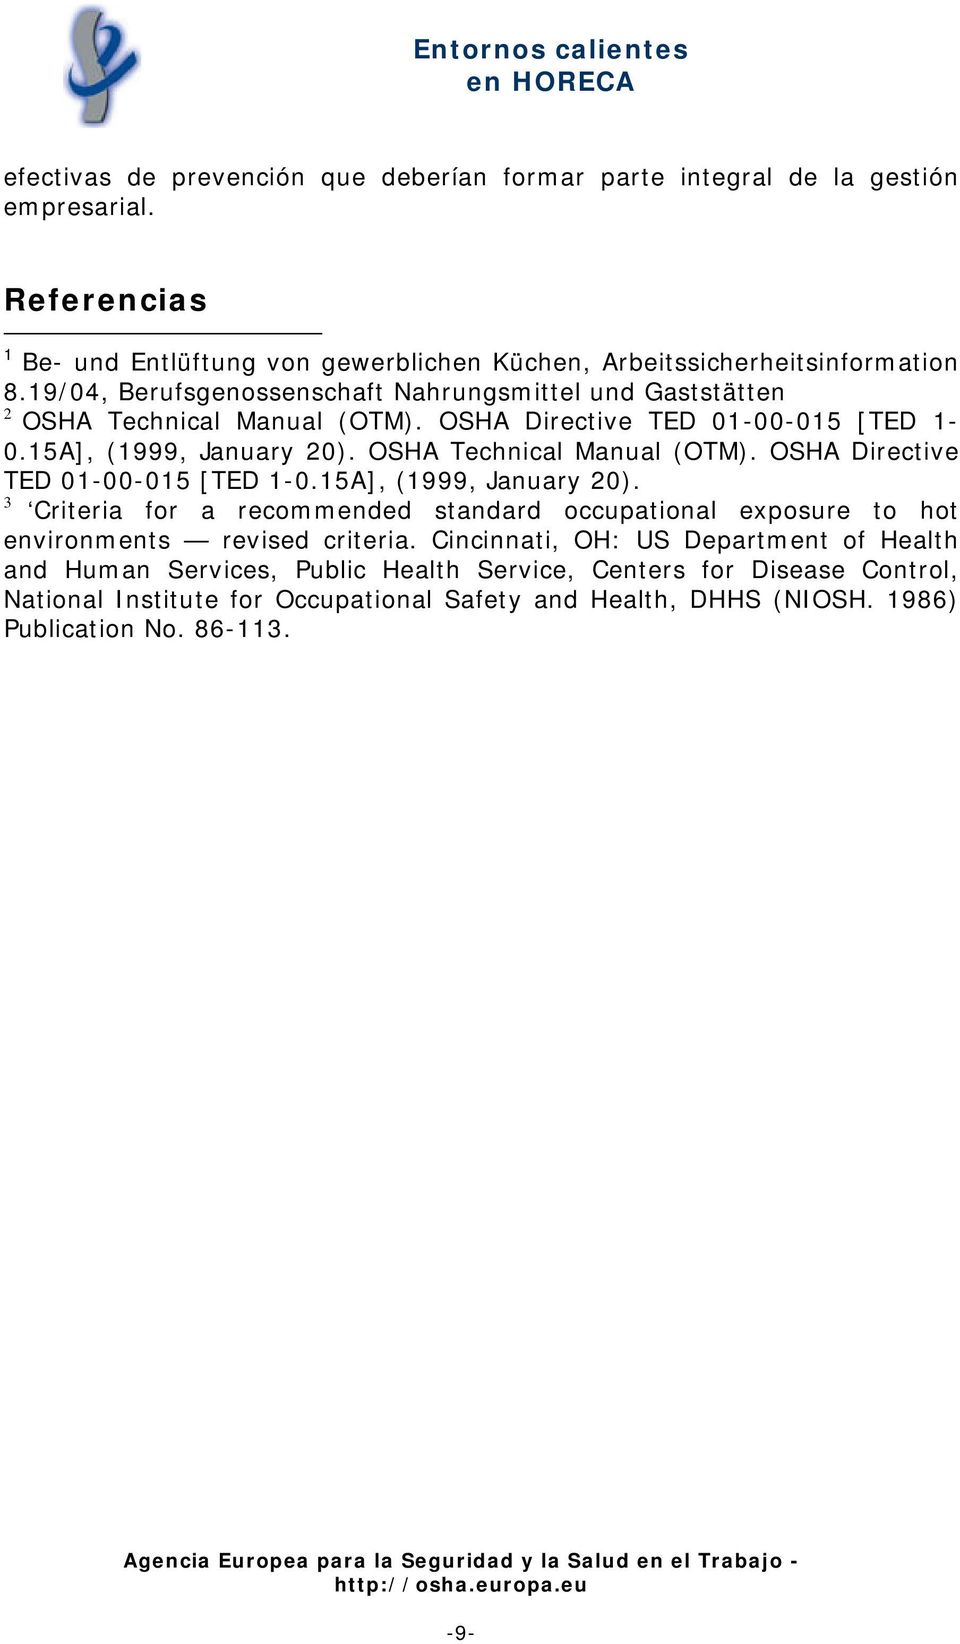 OSHA Technical Manual (OTM). OSHA Directive TED 01-00-015 [TED 1-0.15A], (1999, January 20).